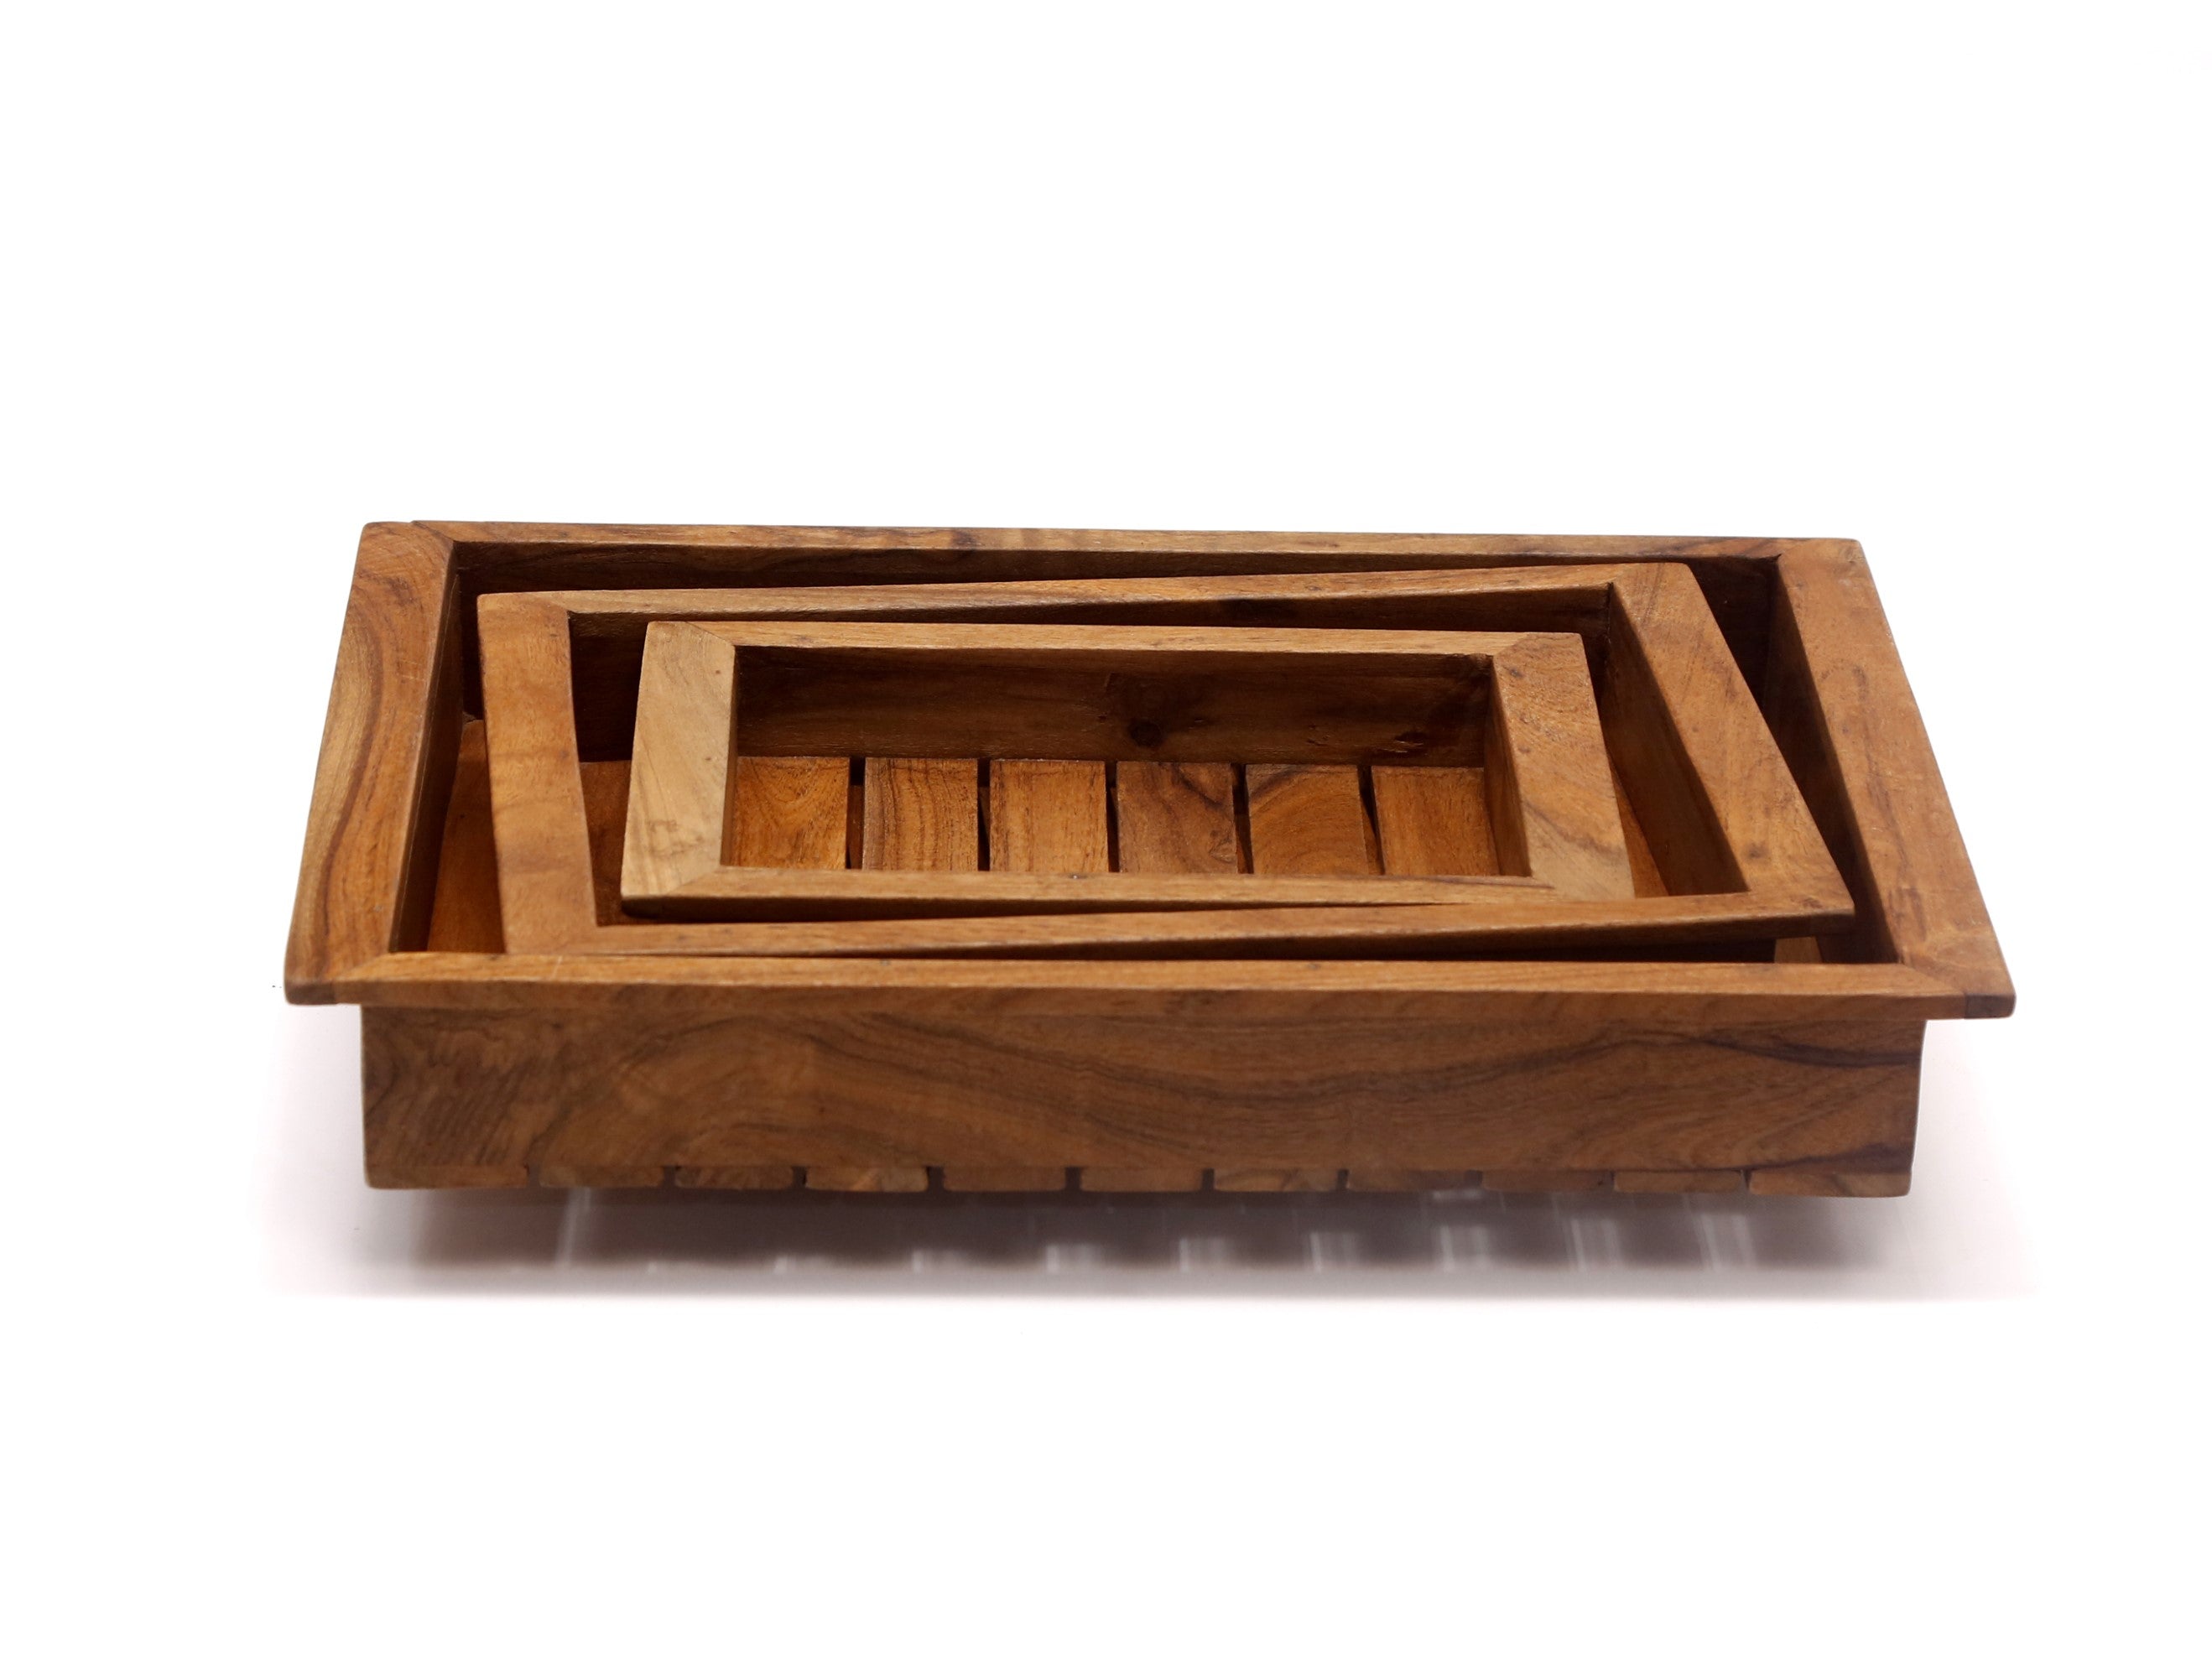 Quaint Wooden Stripe Tray Set - Set of 3 Tray